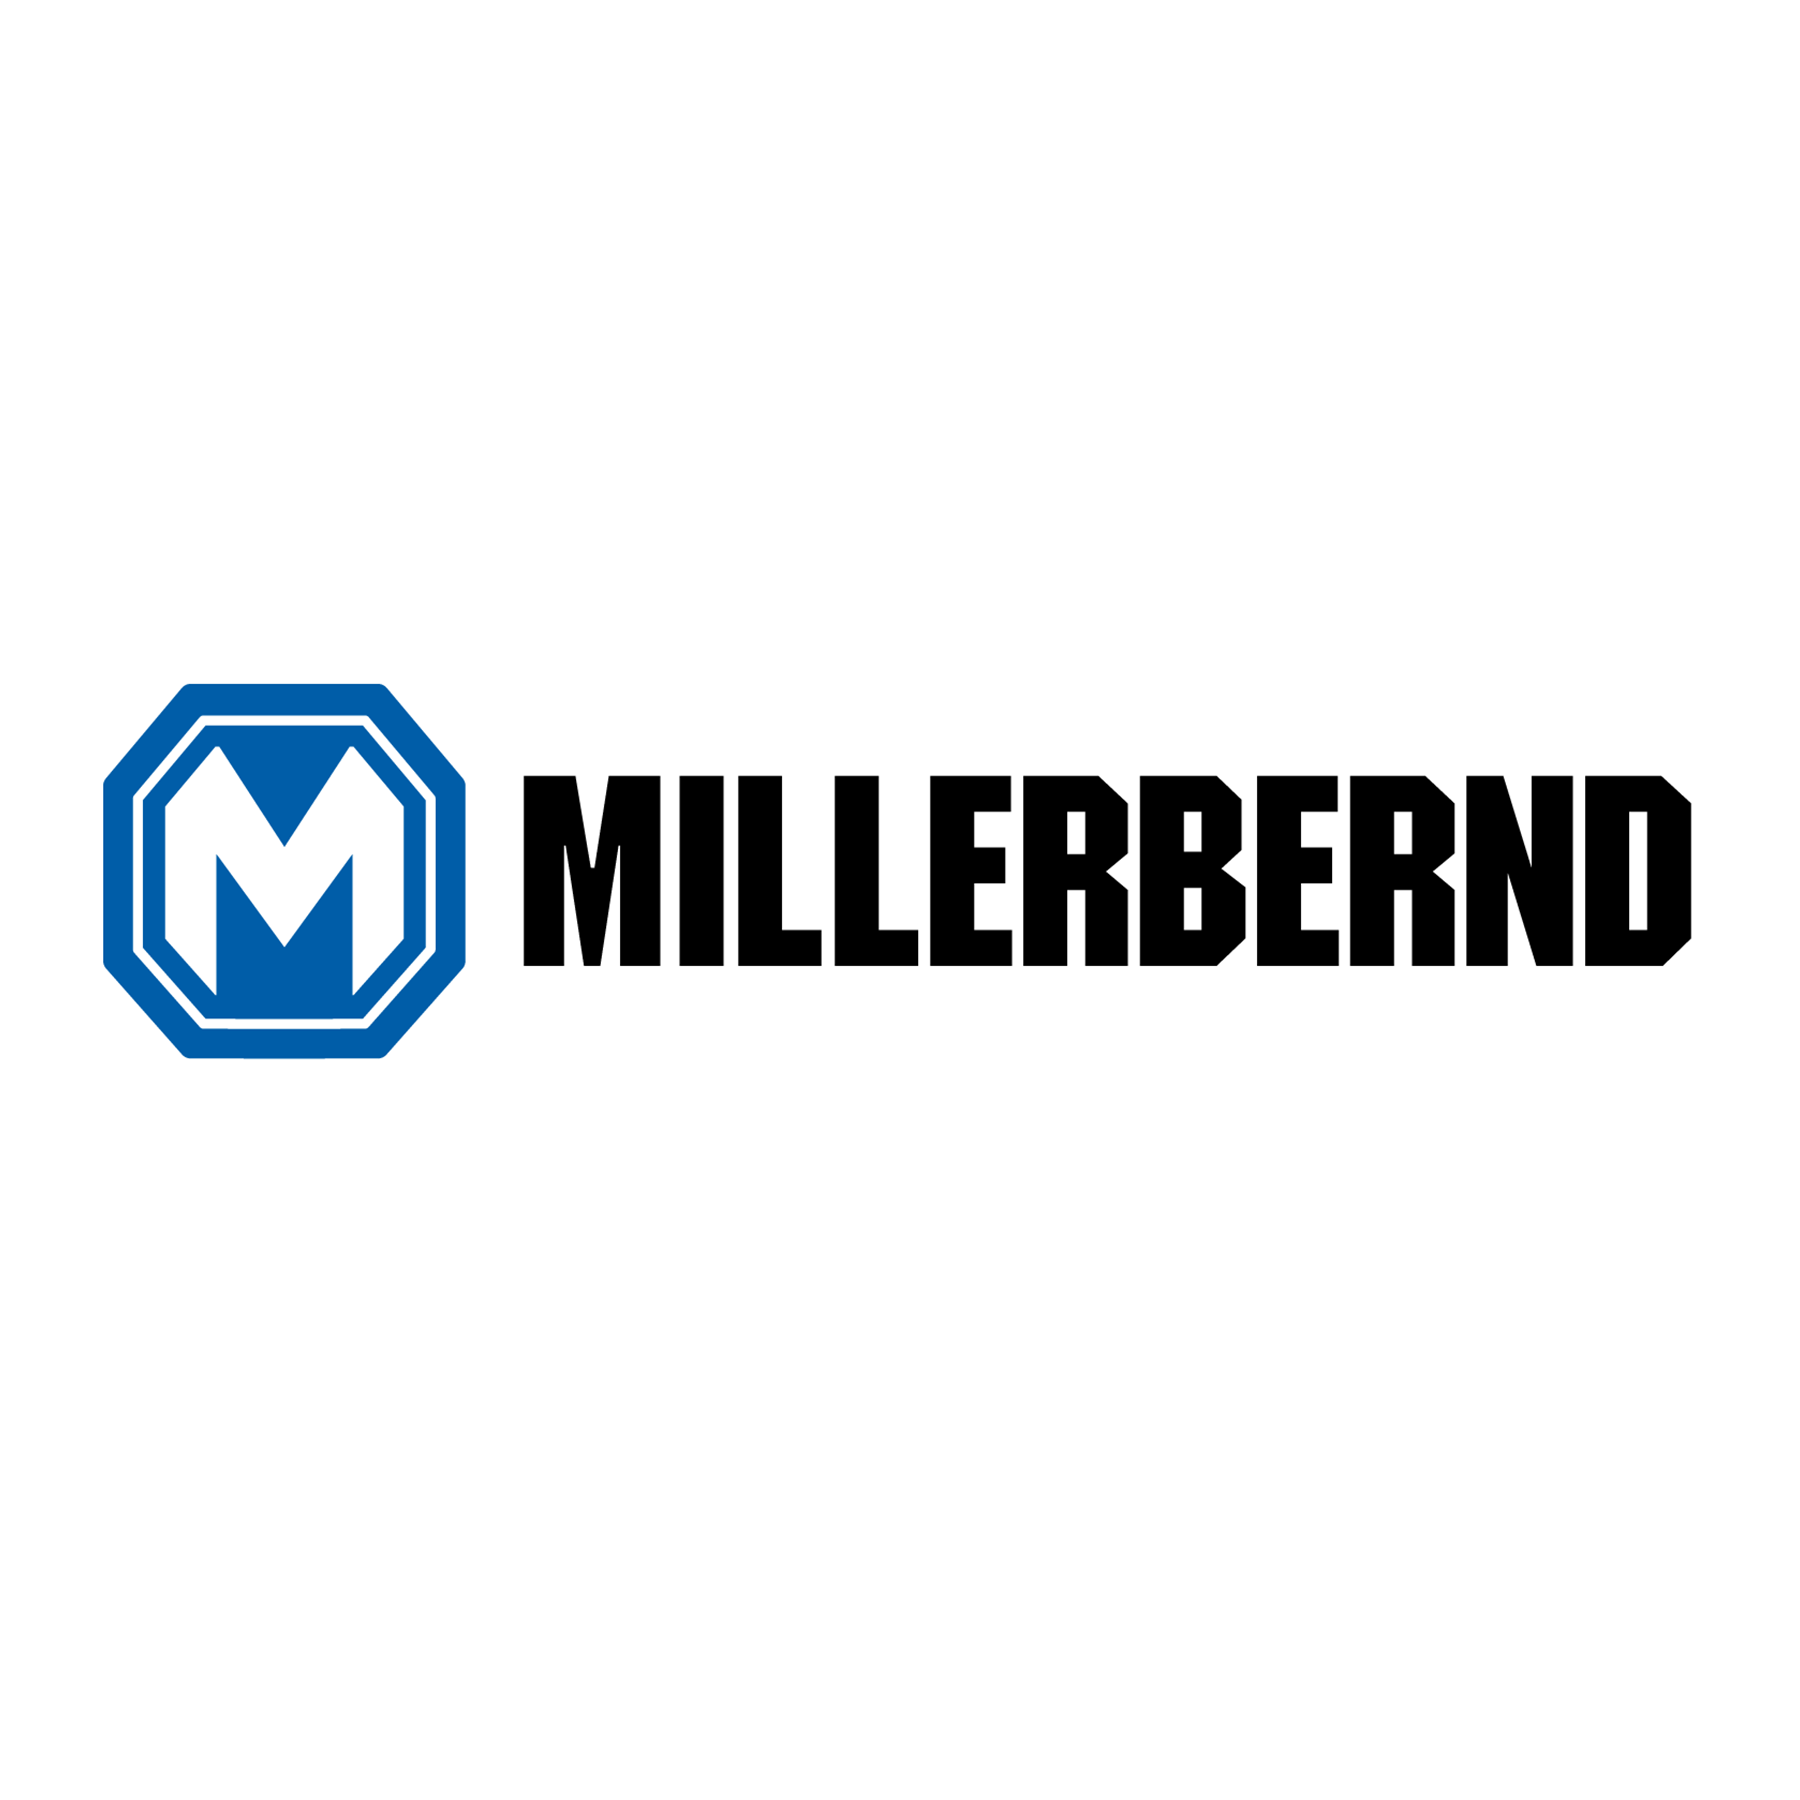 Millerbernd